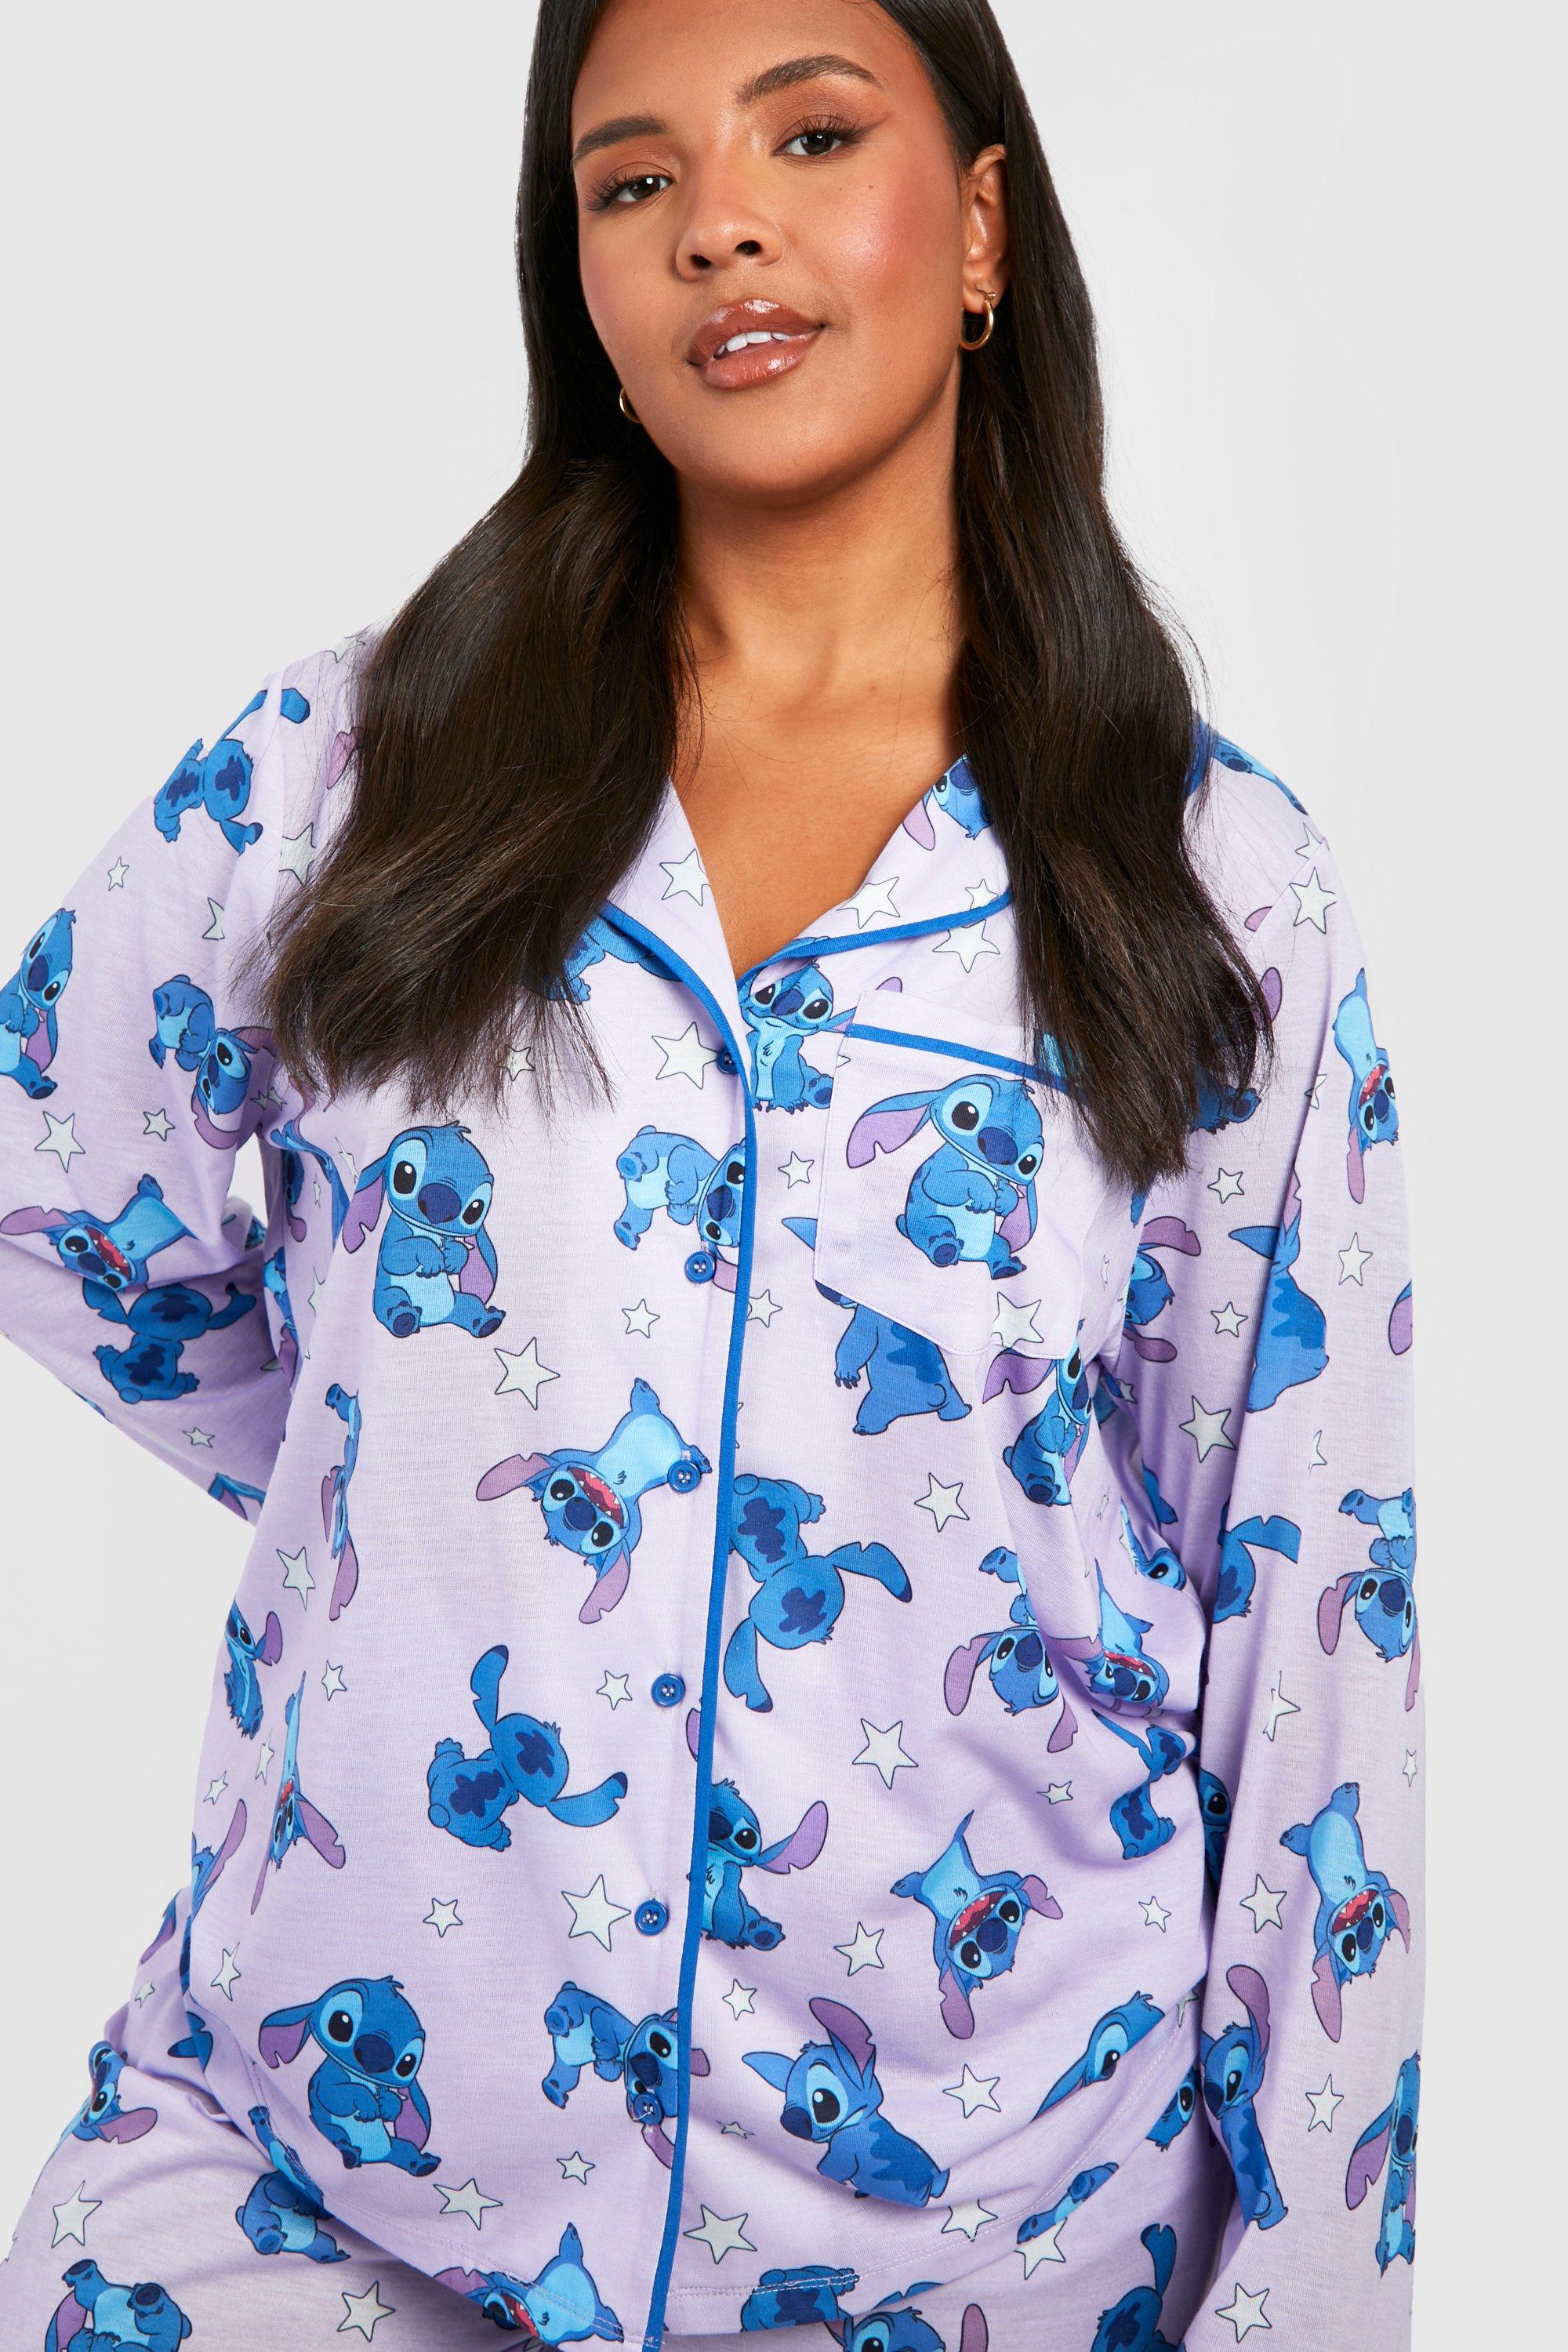 Lilo & Stitch pyjama set Color pale blue - SINSAY - 4036K-05X